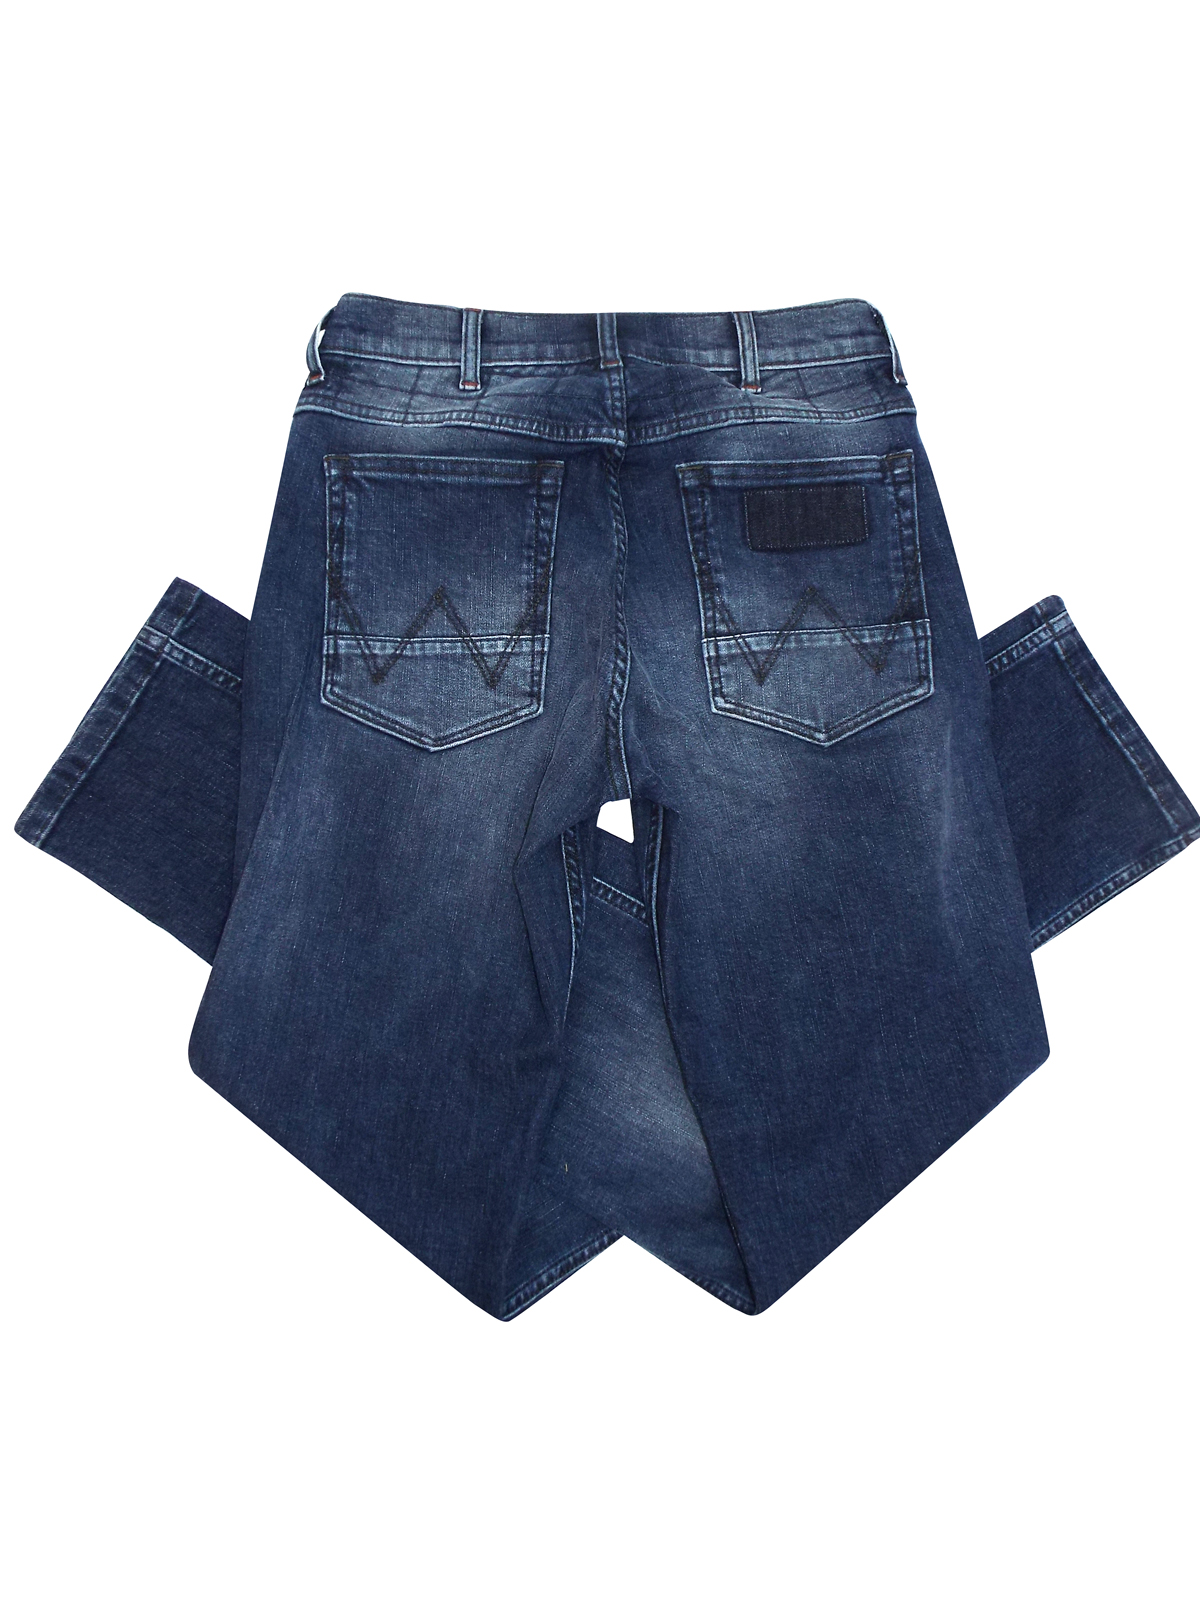 Wrangler - - Wr4ngler INDIGO Regular Fit Pure Cotton Jeans - Waist Size ...